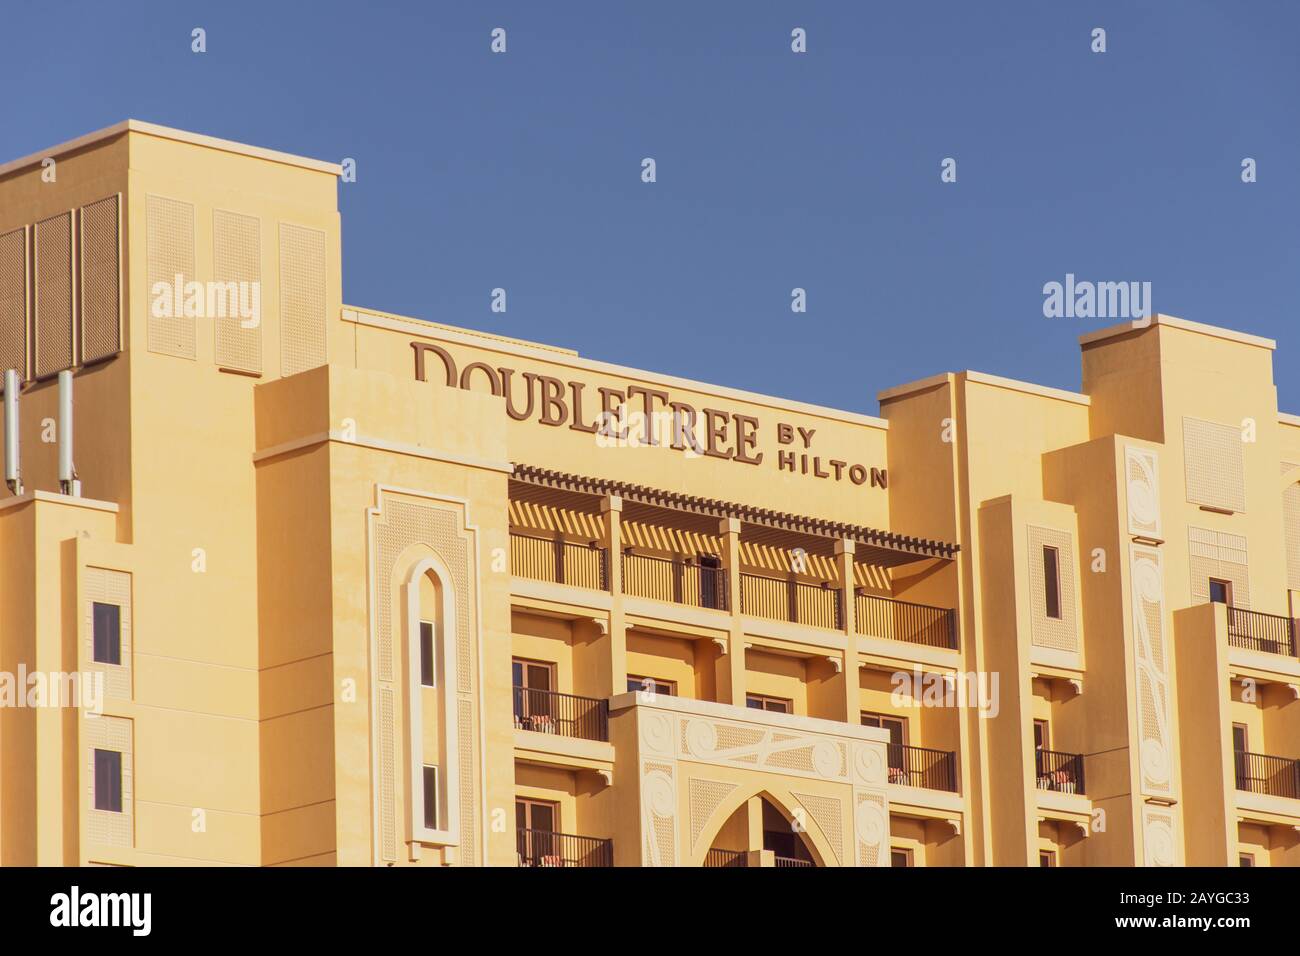 'Ras al Khaimah, Ras al Khaimah/United Arab Emirates - 2/14/2020: 'Hilton Double Tree Hotel close up of building sign against blue sky background Marj Stock Photo